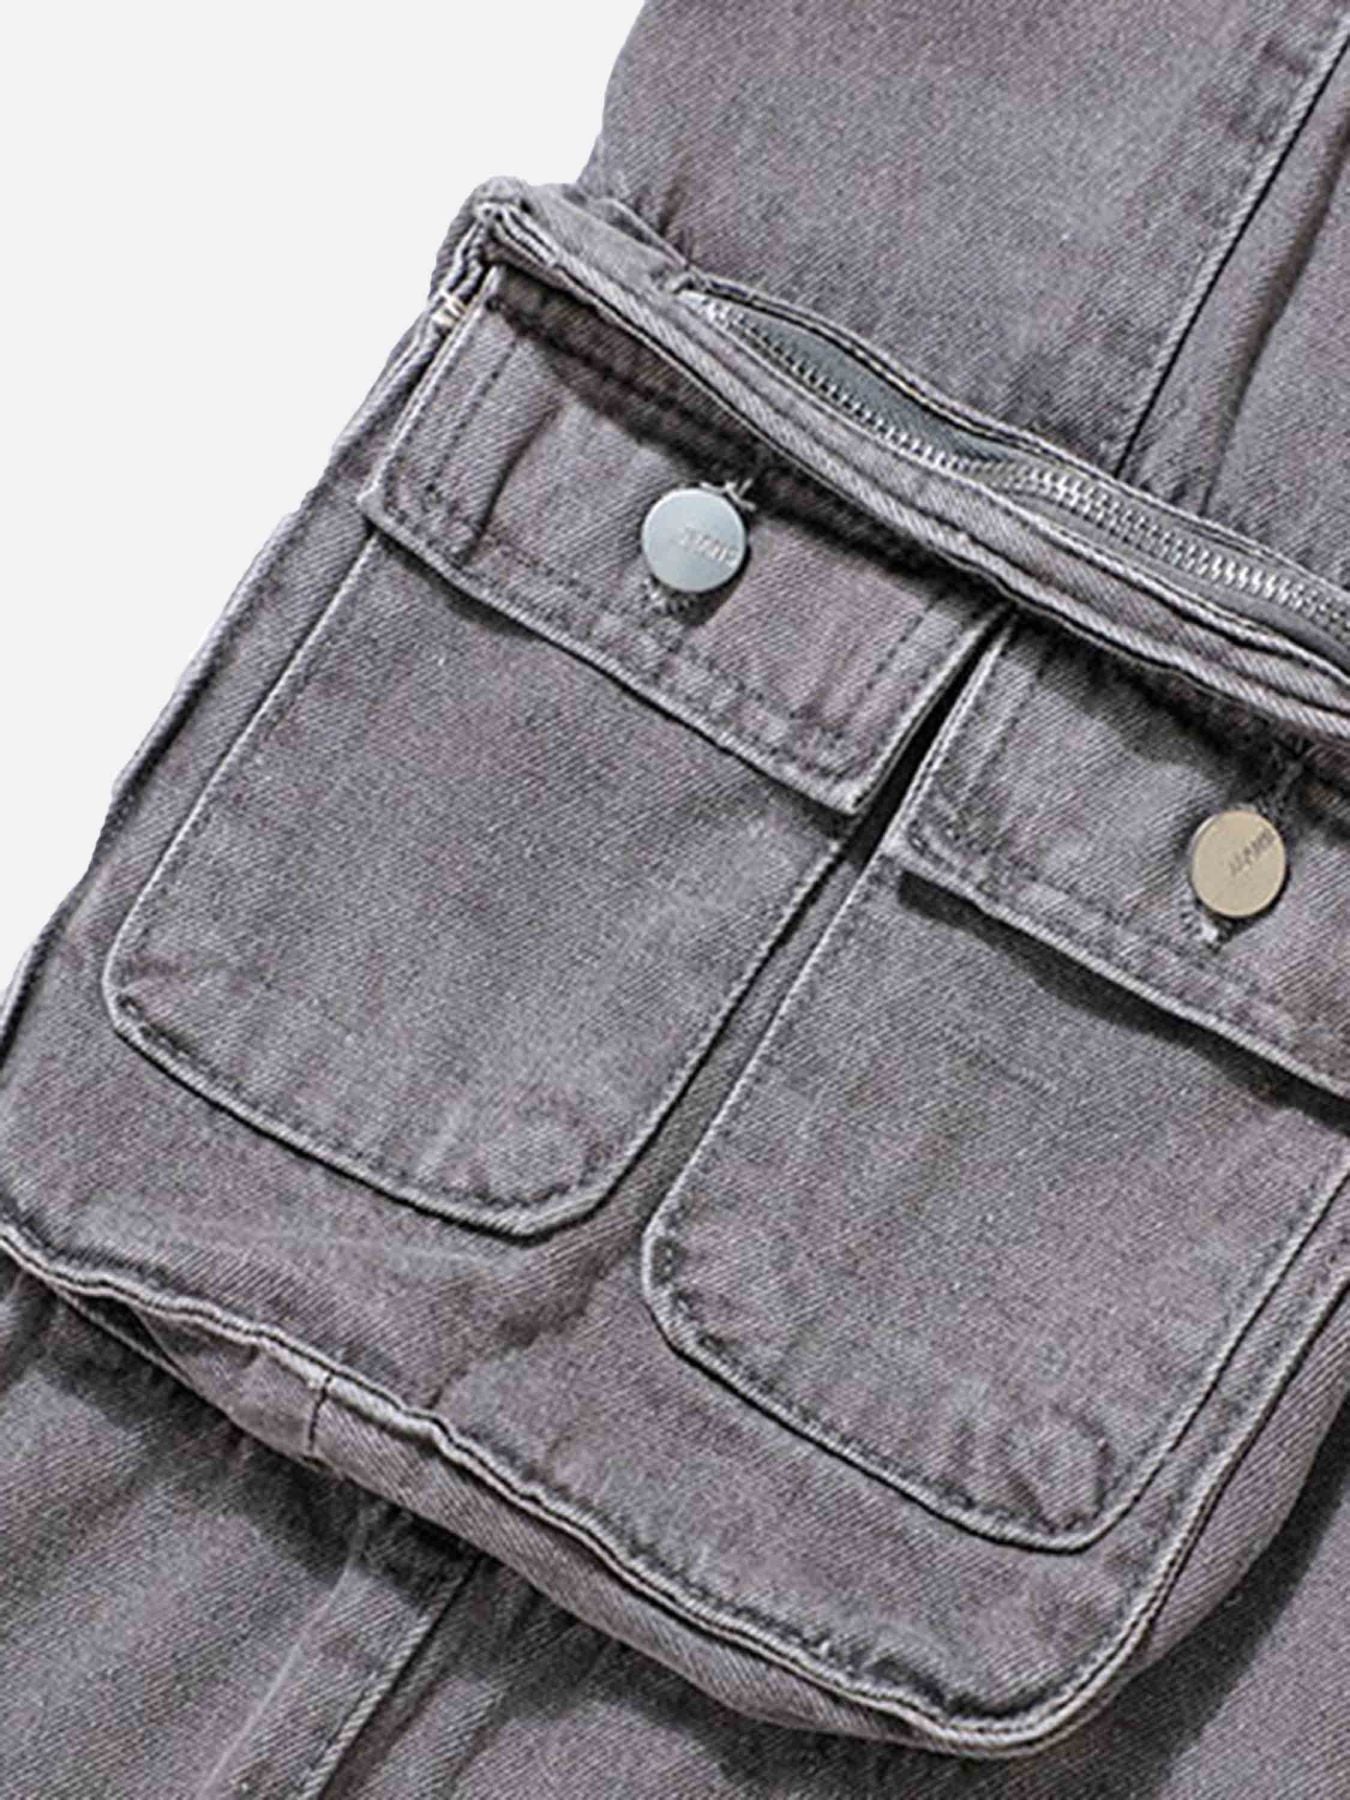 The Supermade American Multi-Pocket Work Pants - 1659